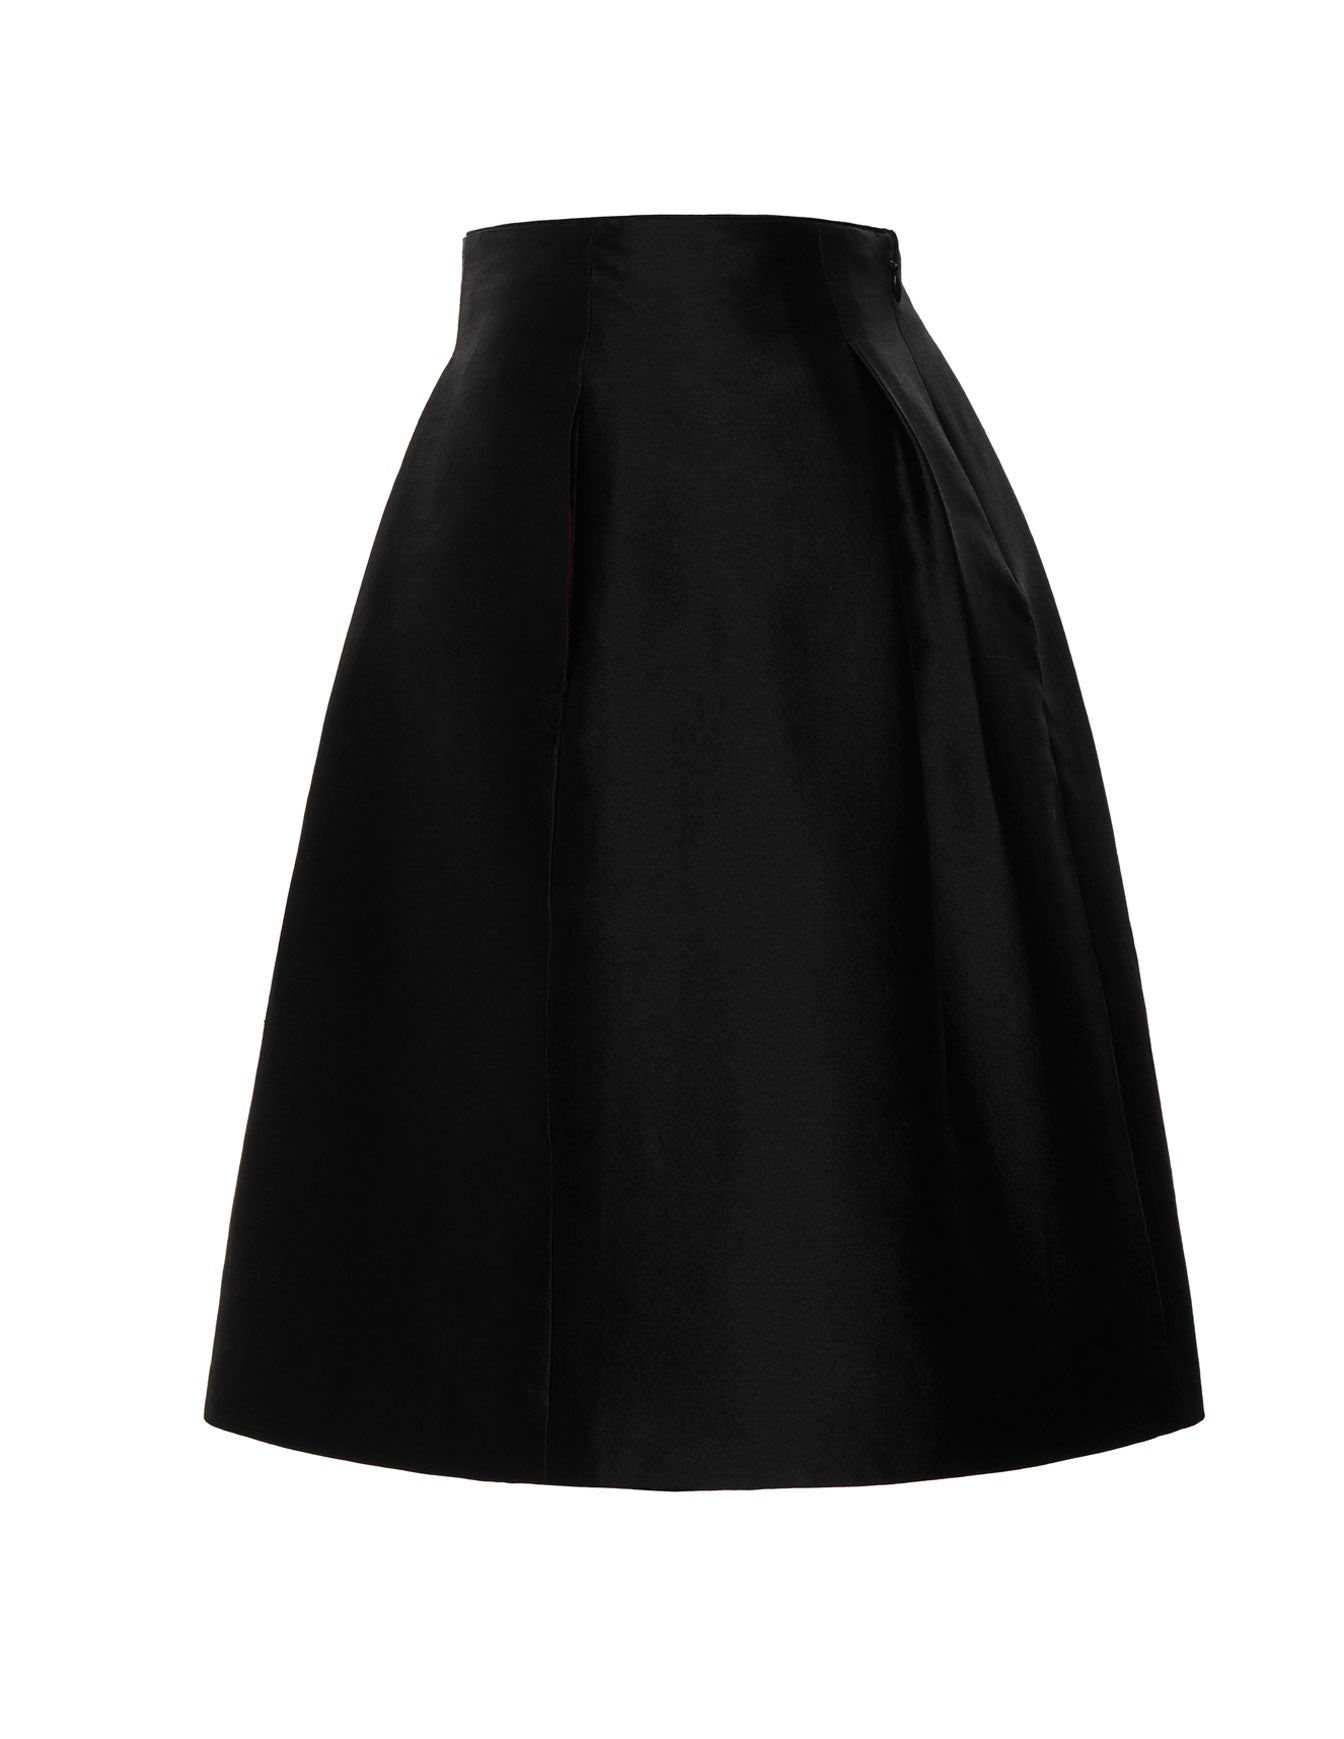 Classic A-line Skirt with Pockets — The Diana - Senza Tempo Fashion